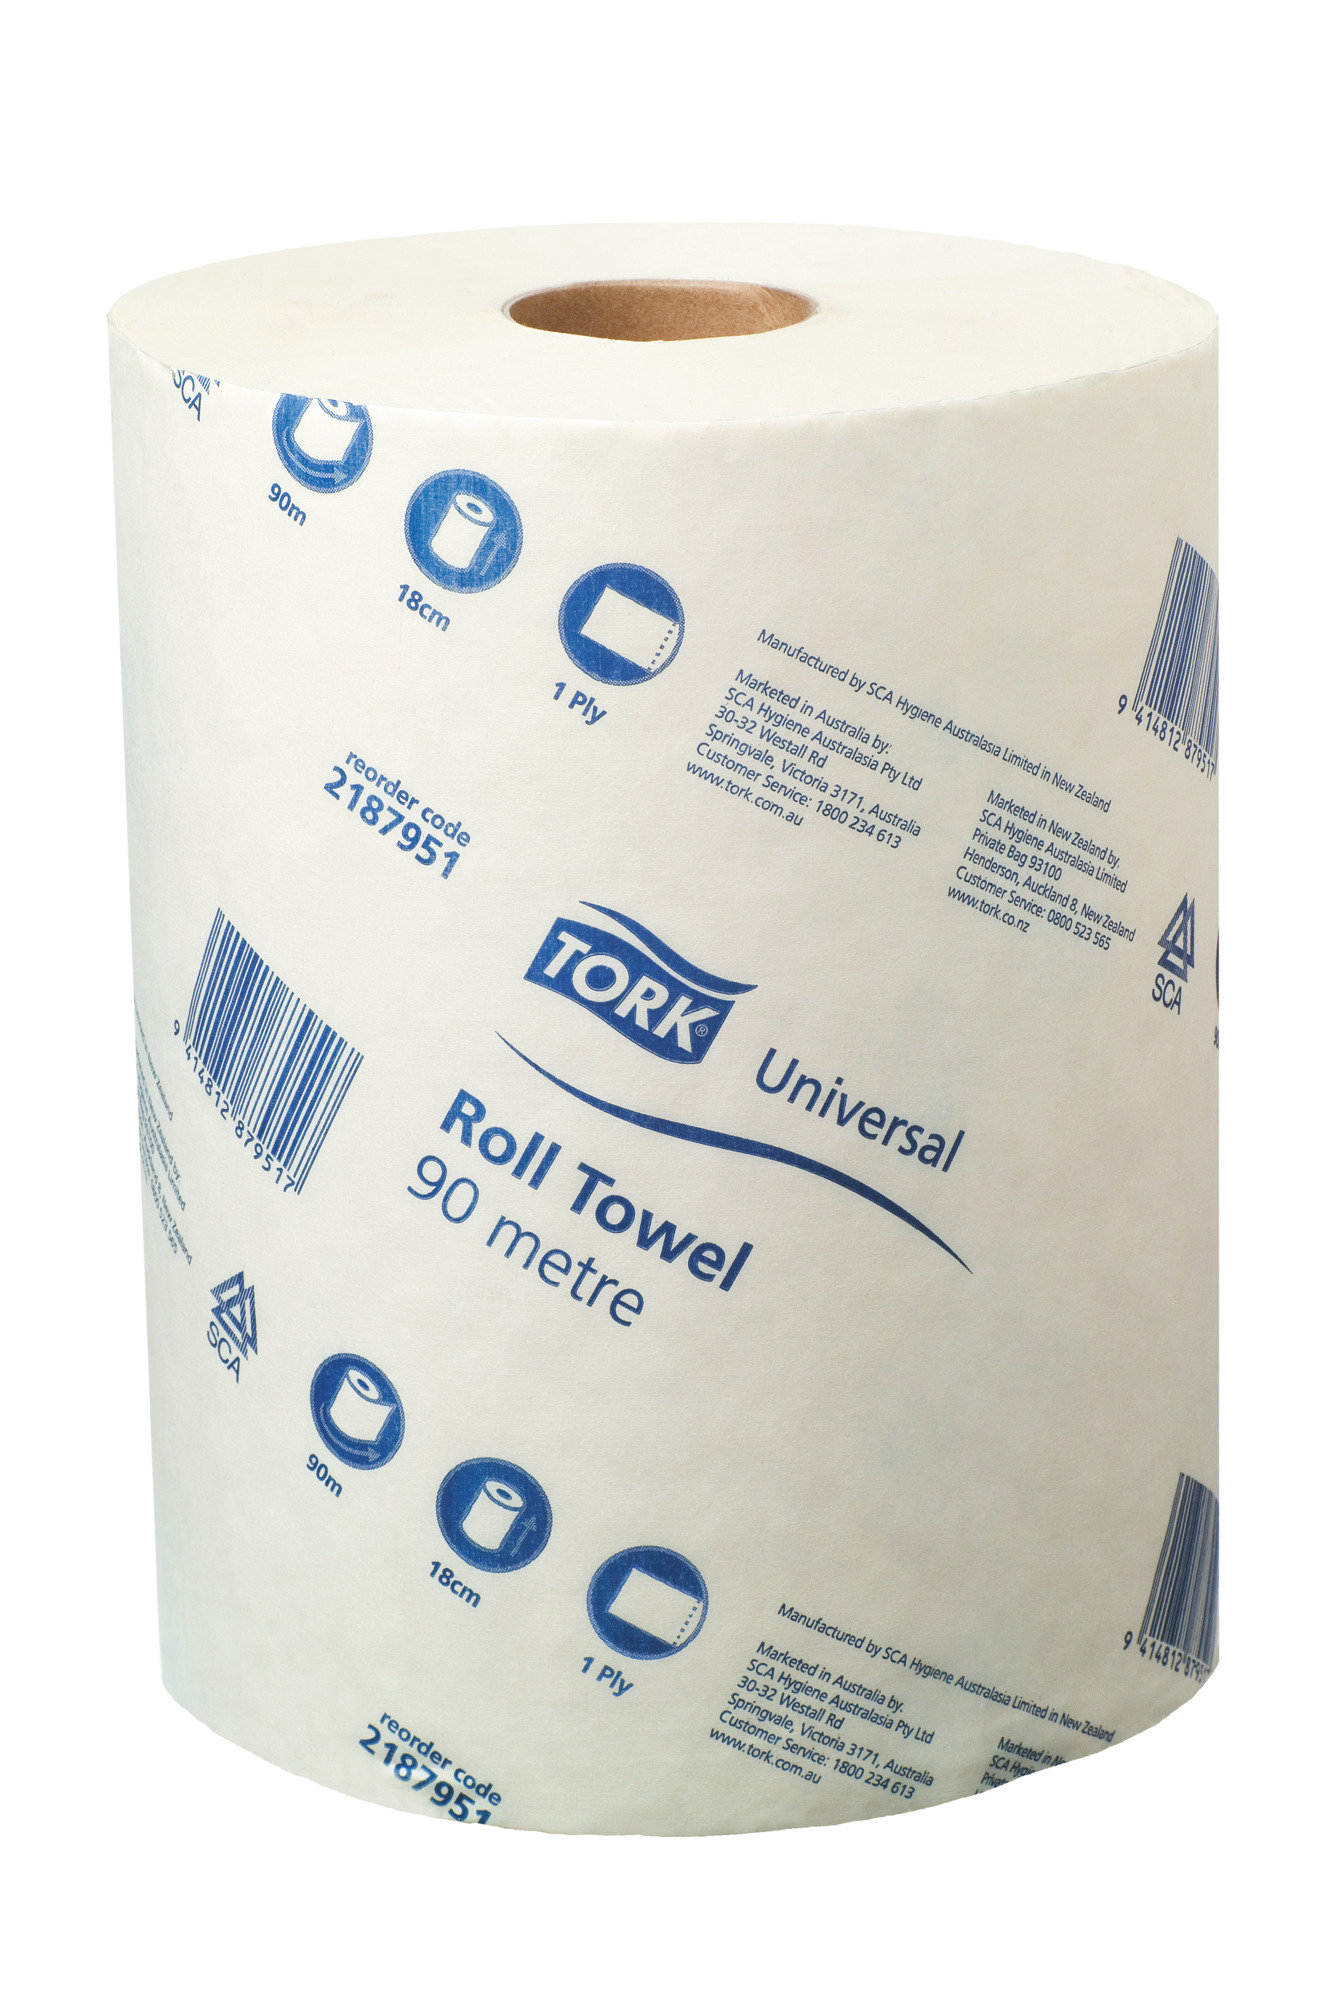 Roll Towel - T2187951 - SCA Tork Commercial (18cm x 90m) 16/Ctn